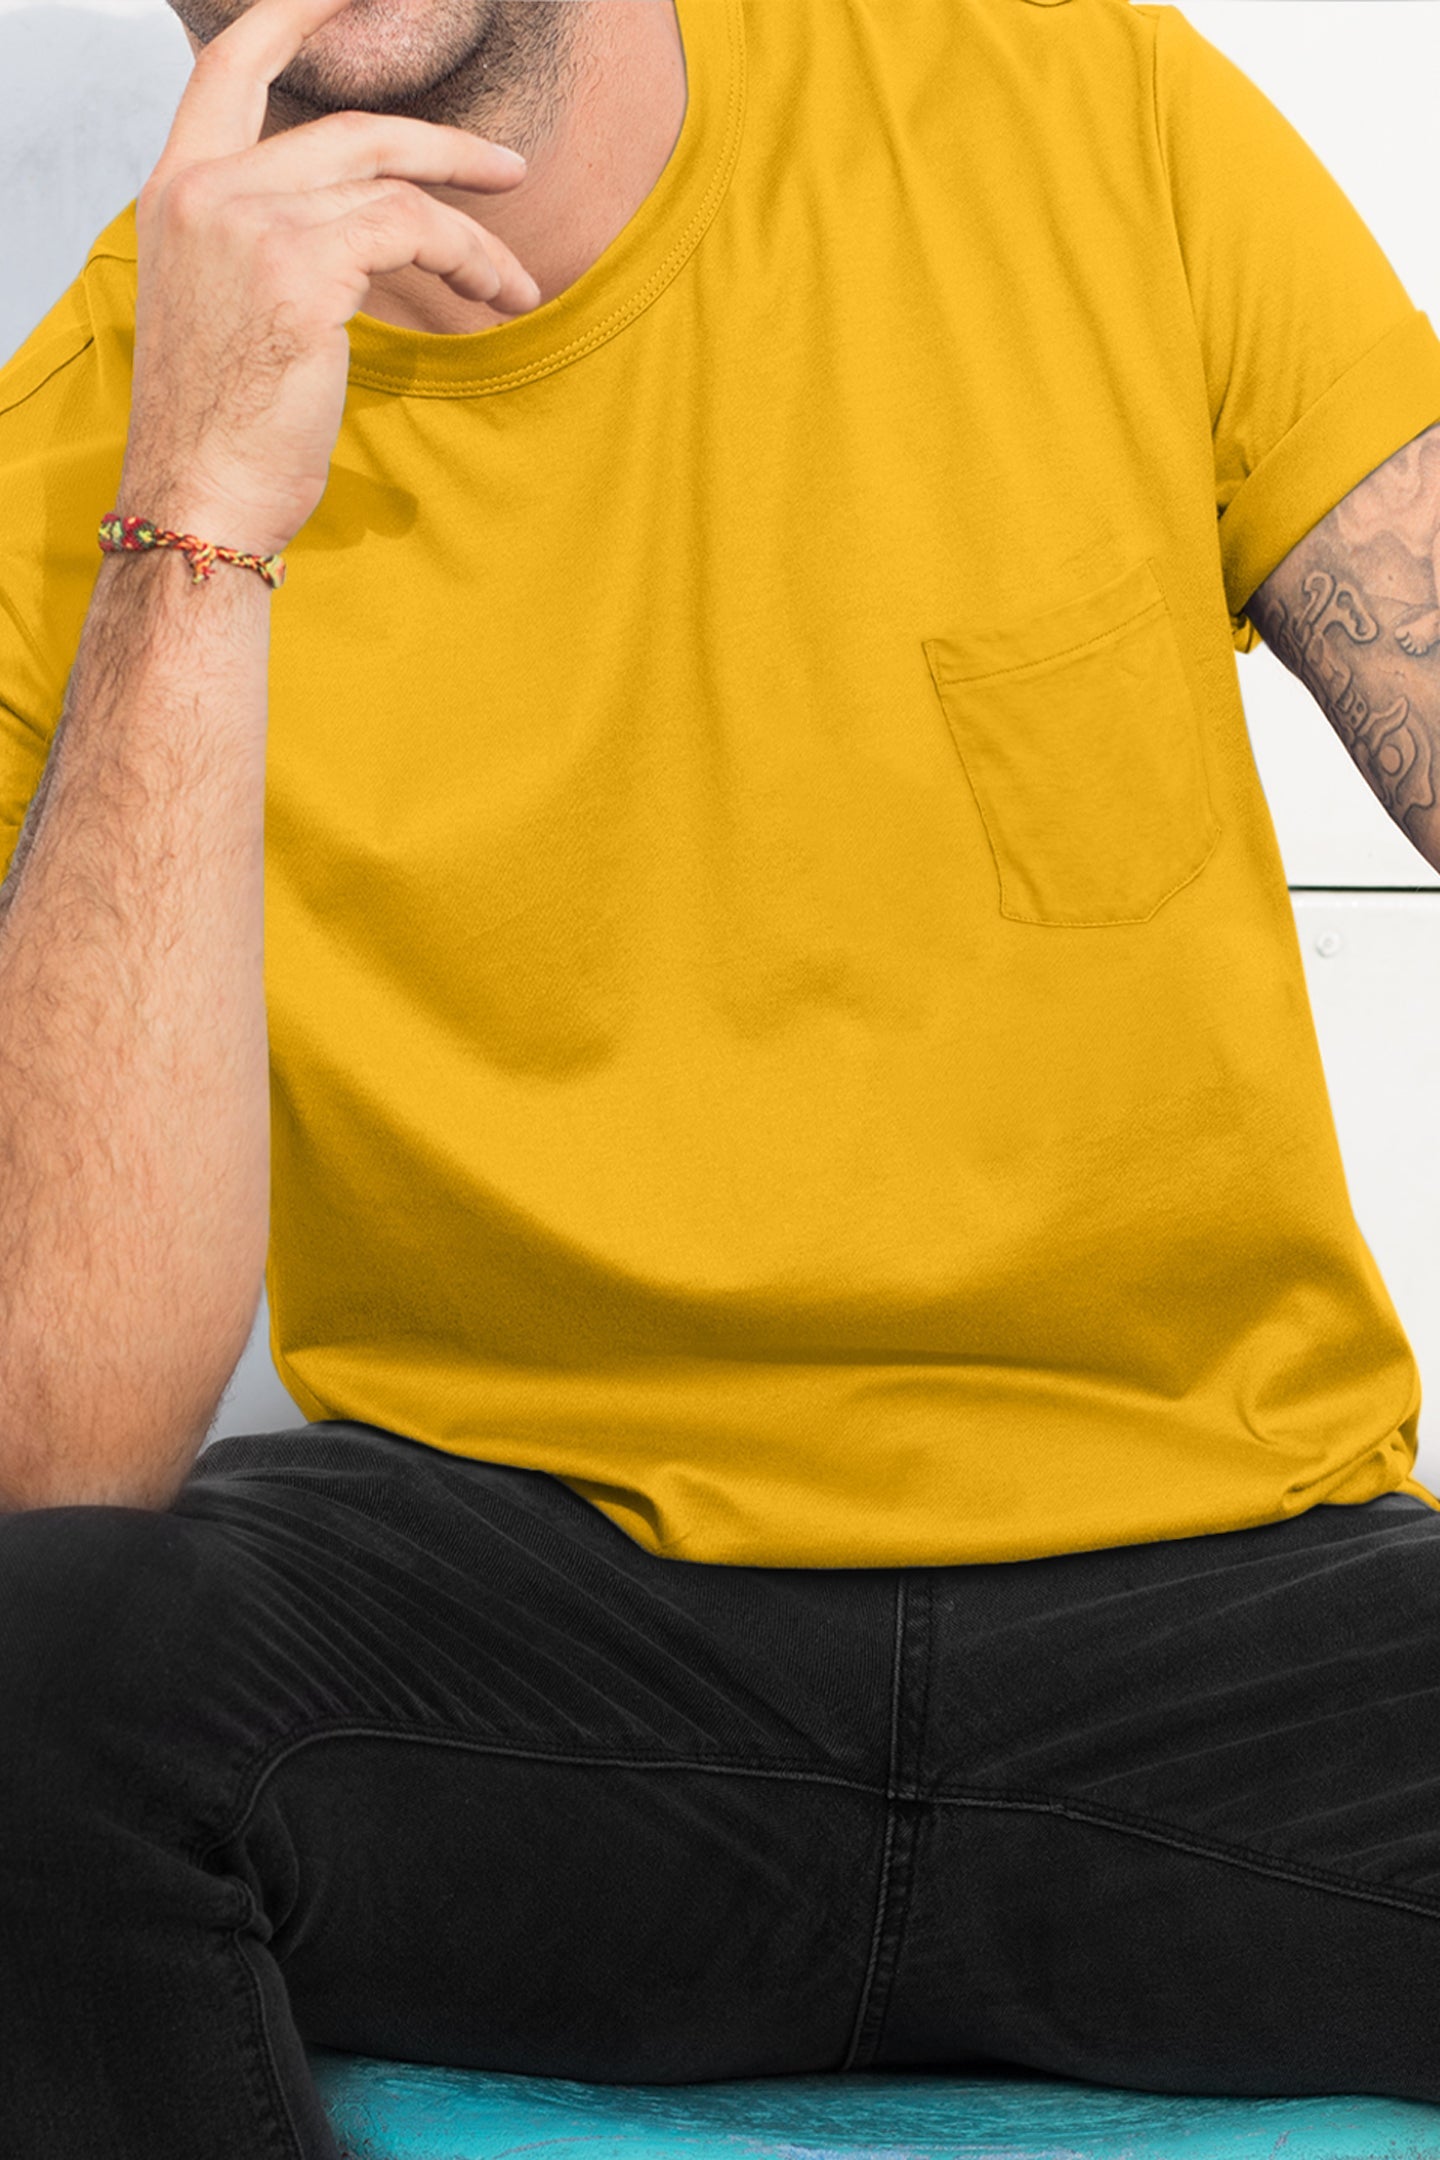 Baliza Men's 100% Cotton Round Neck T-shirt- Mustard Yellow